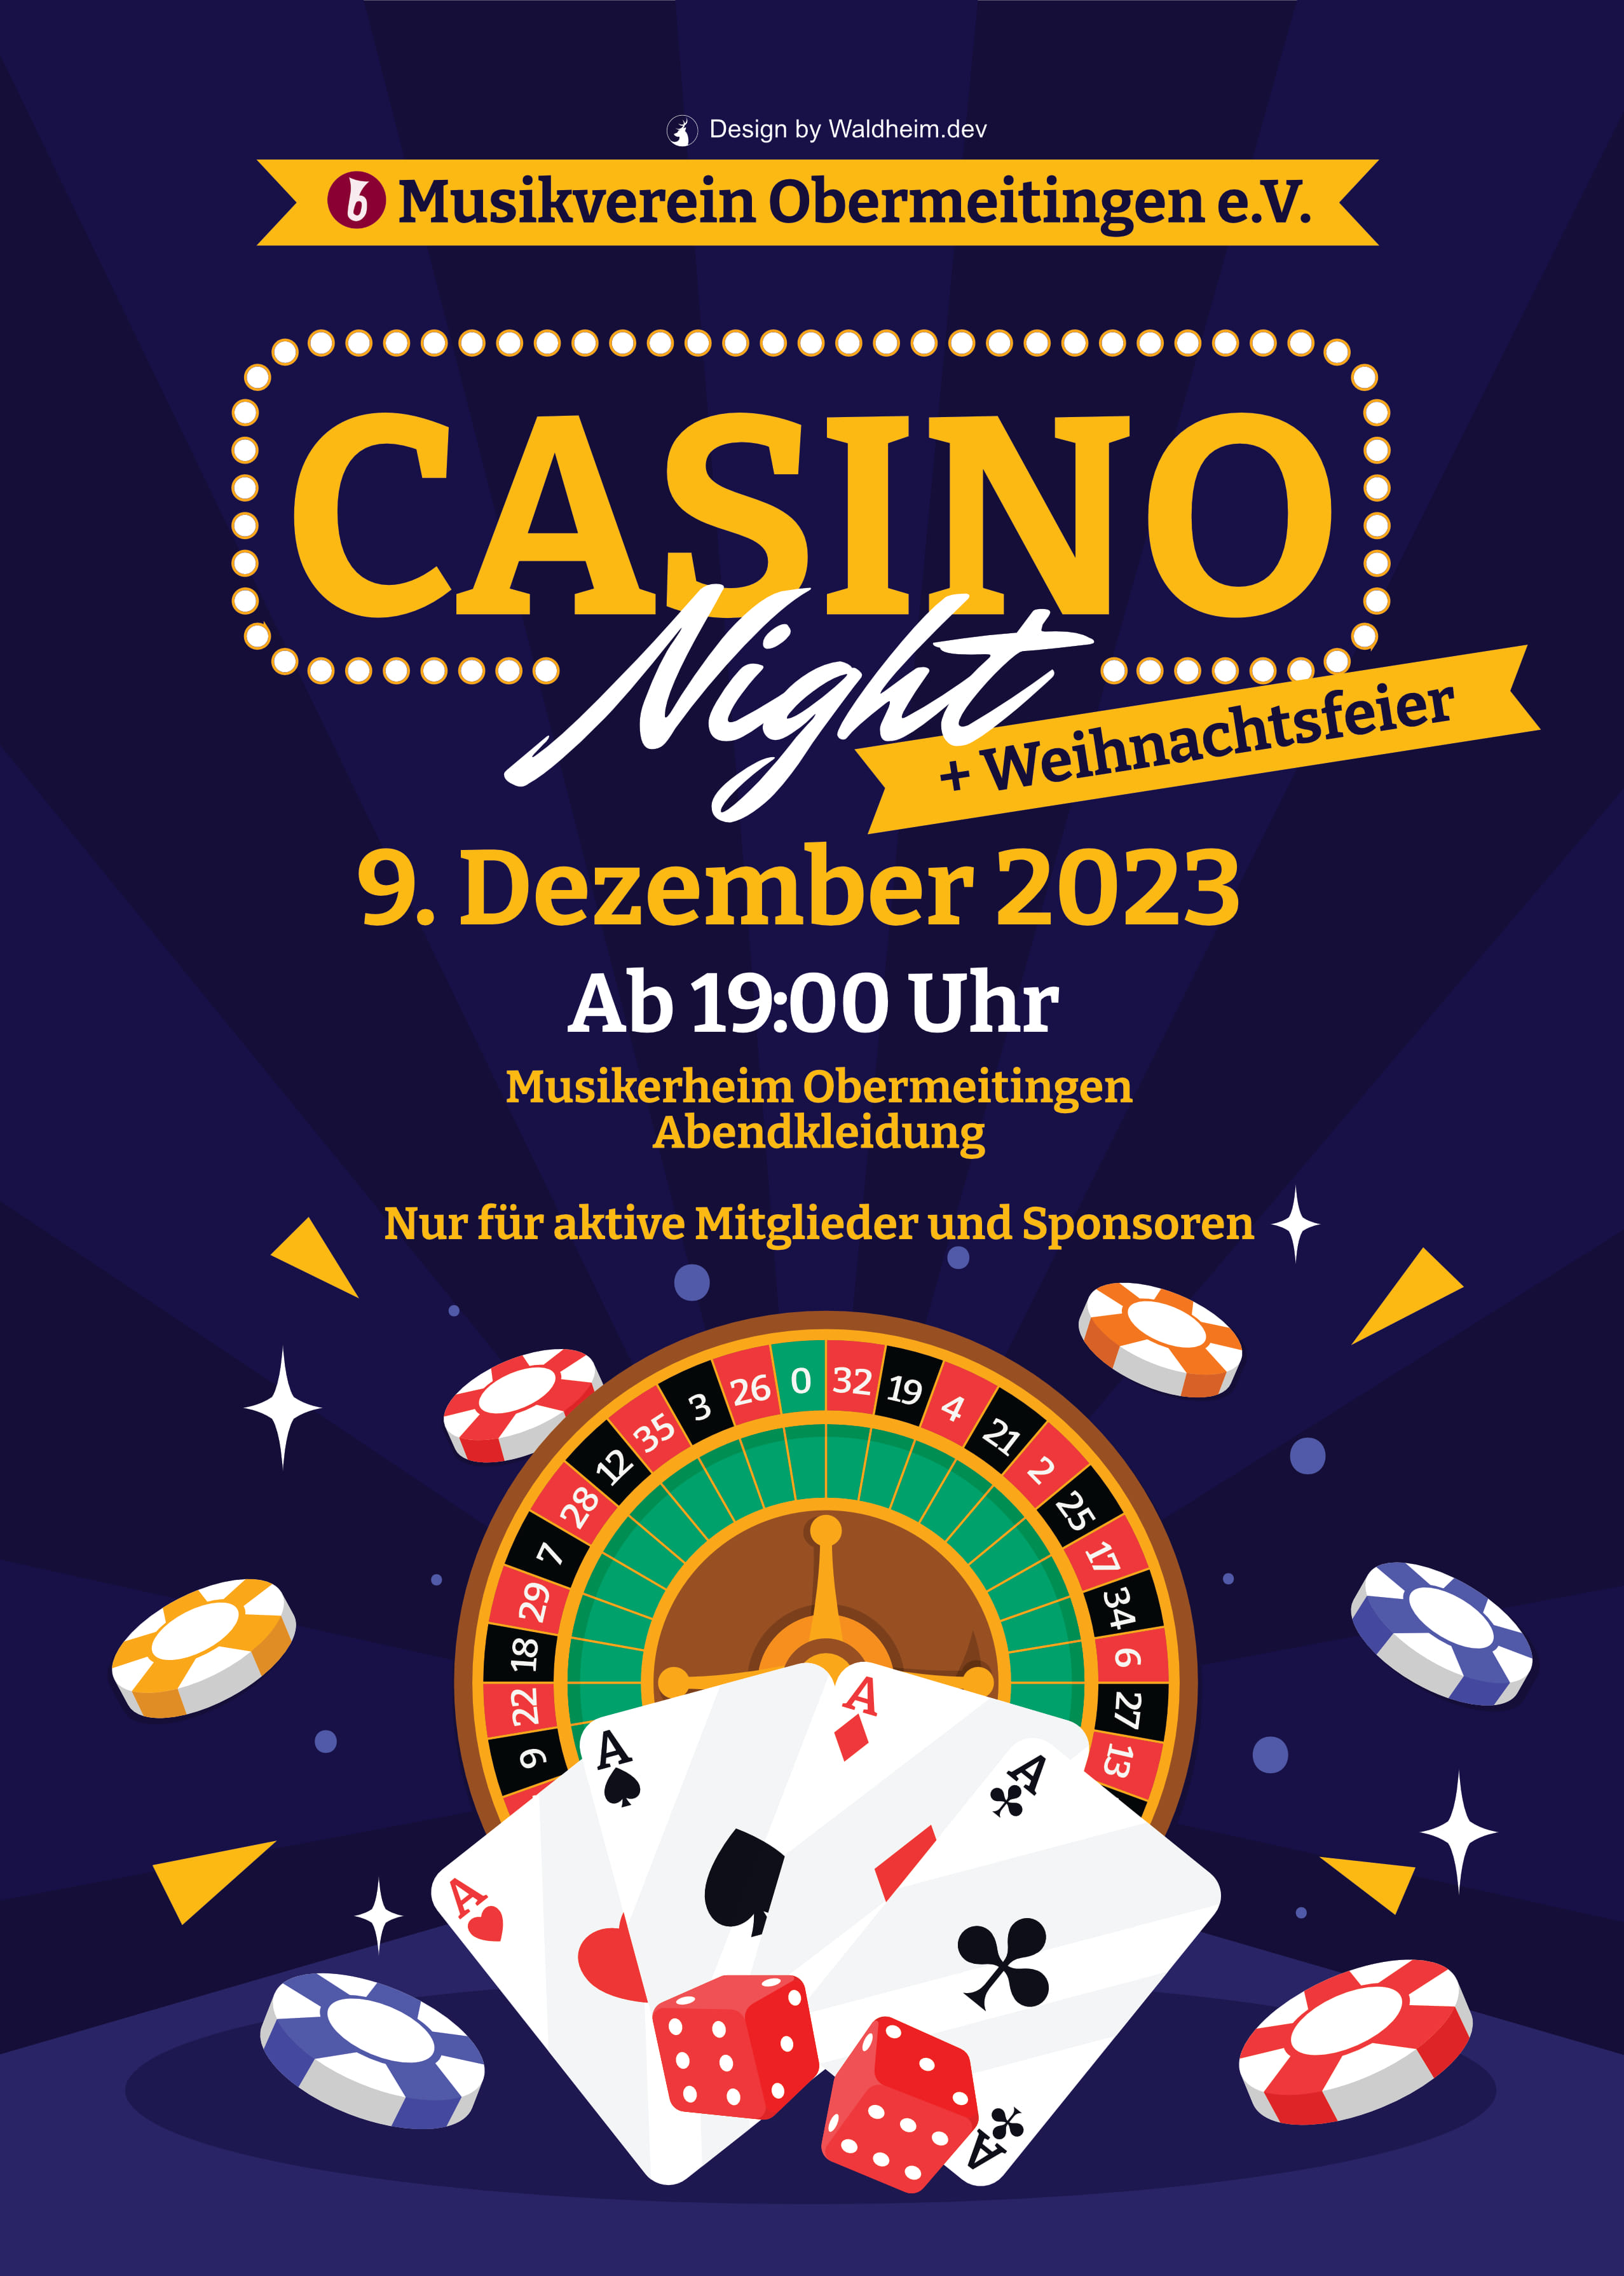 Casino Night + Weihnachtsfeier